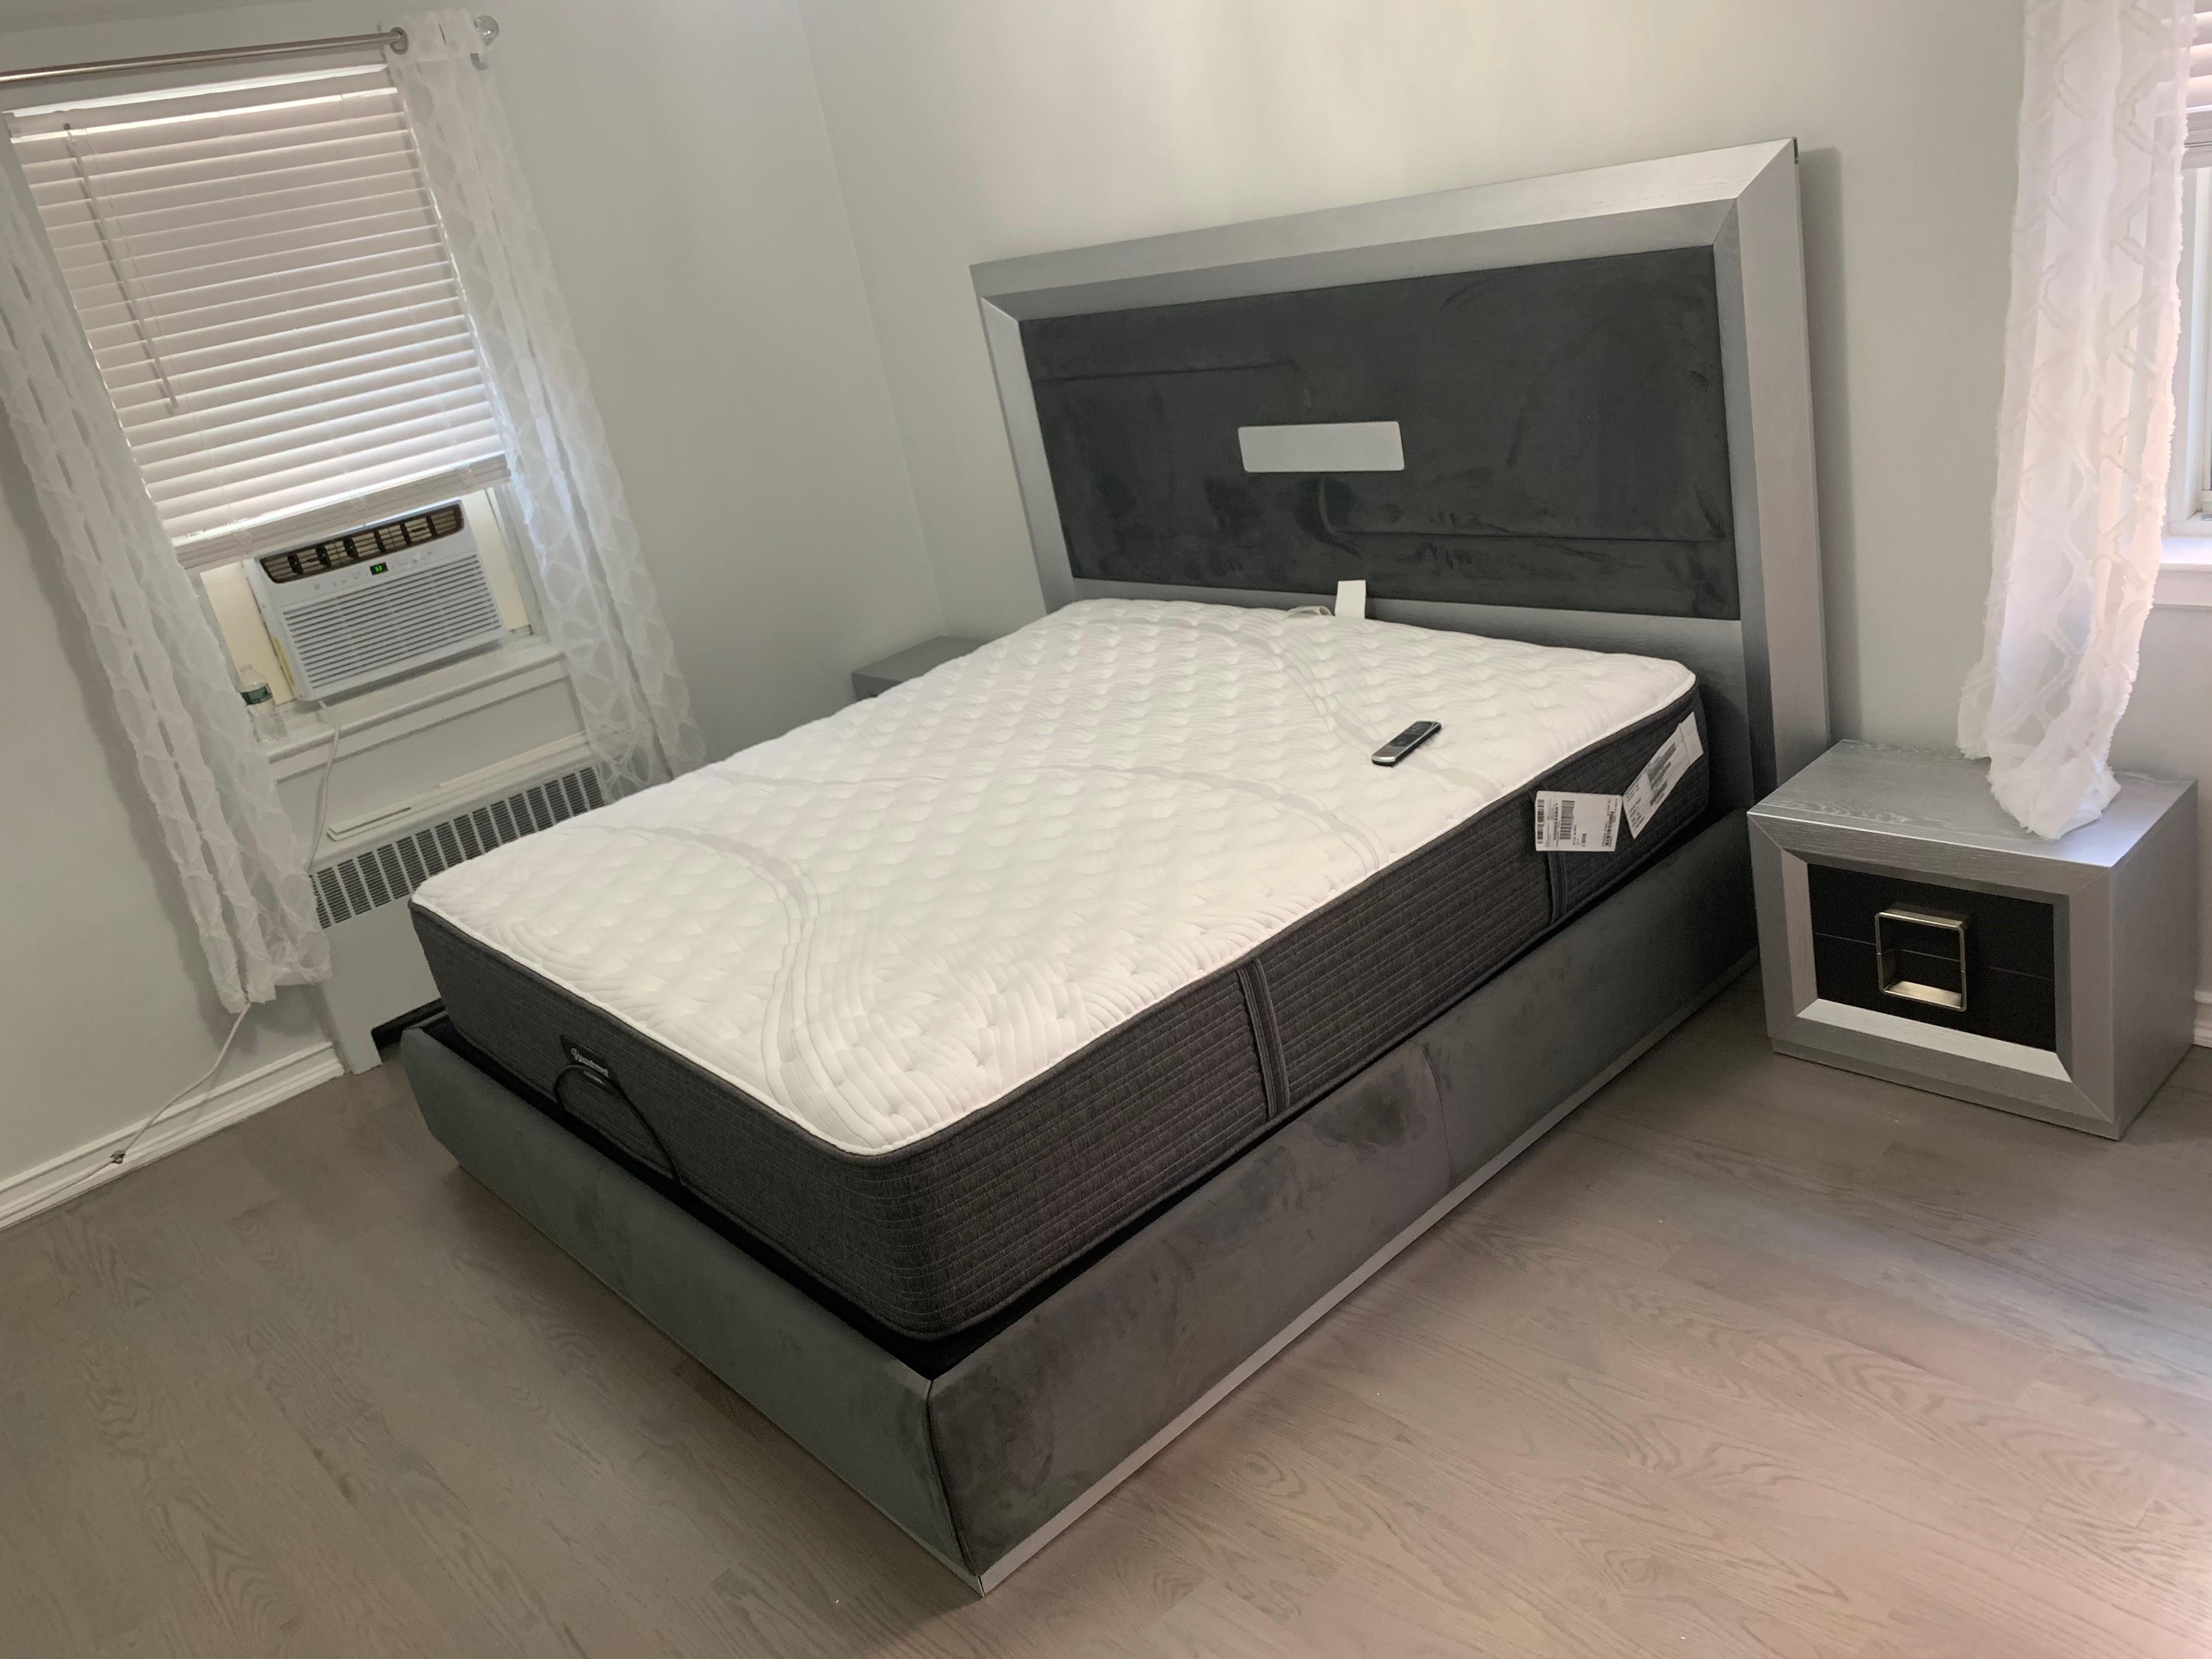 

    
ENZOBEDQS-2NDMC-6PC Grey Microfiber Queen Bedroom Set 6P Enzo ESF Modern Contemporary Franco Spain
